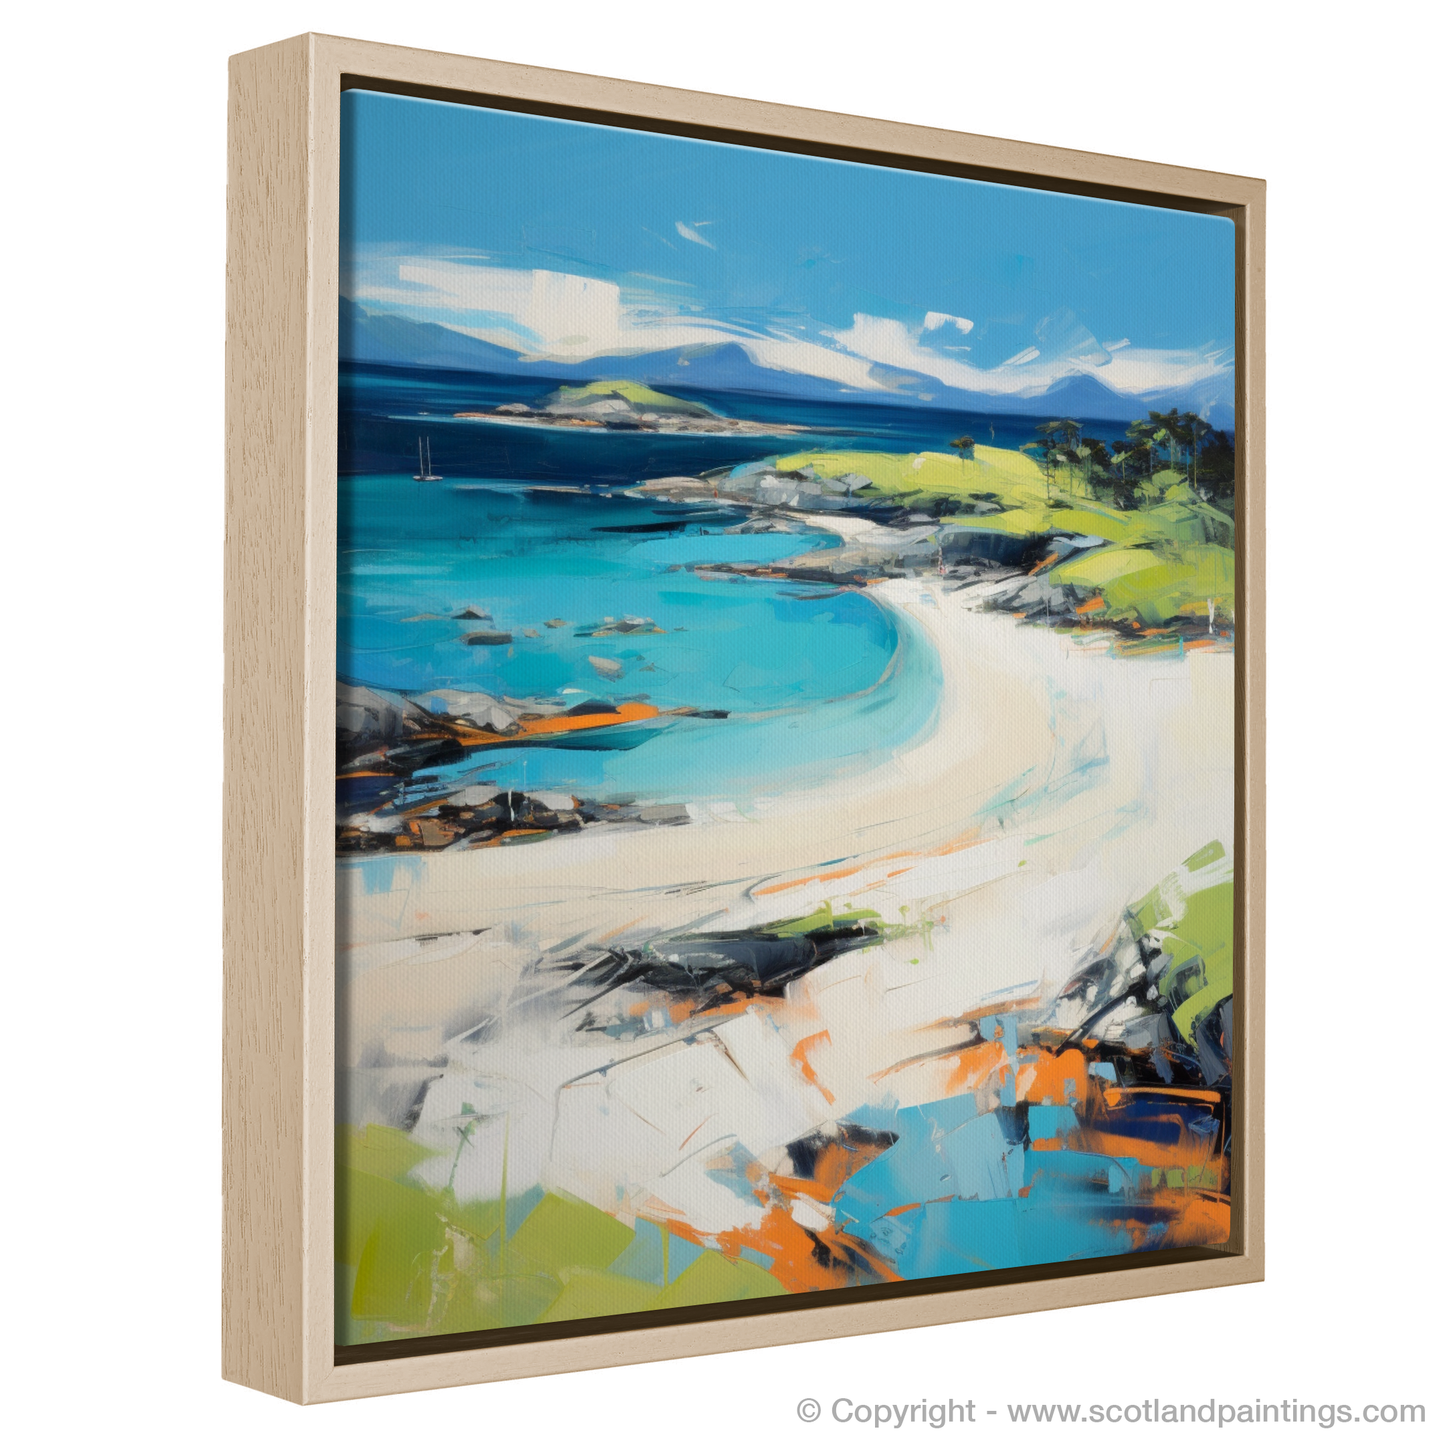 Painting and Art Print of Camusdarach Beach, Arisaig entitled "Essence of Camusdarach: An Abstract Impression of Scotland's Coastal Gem".